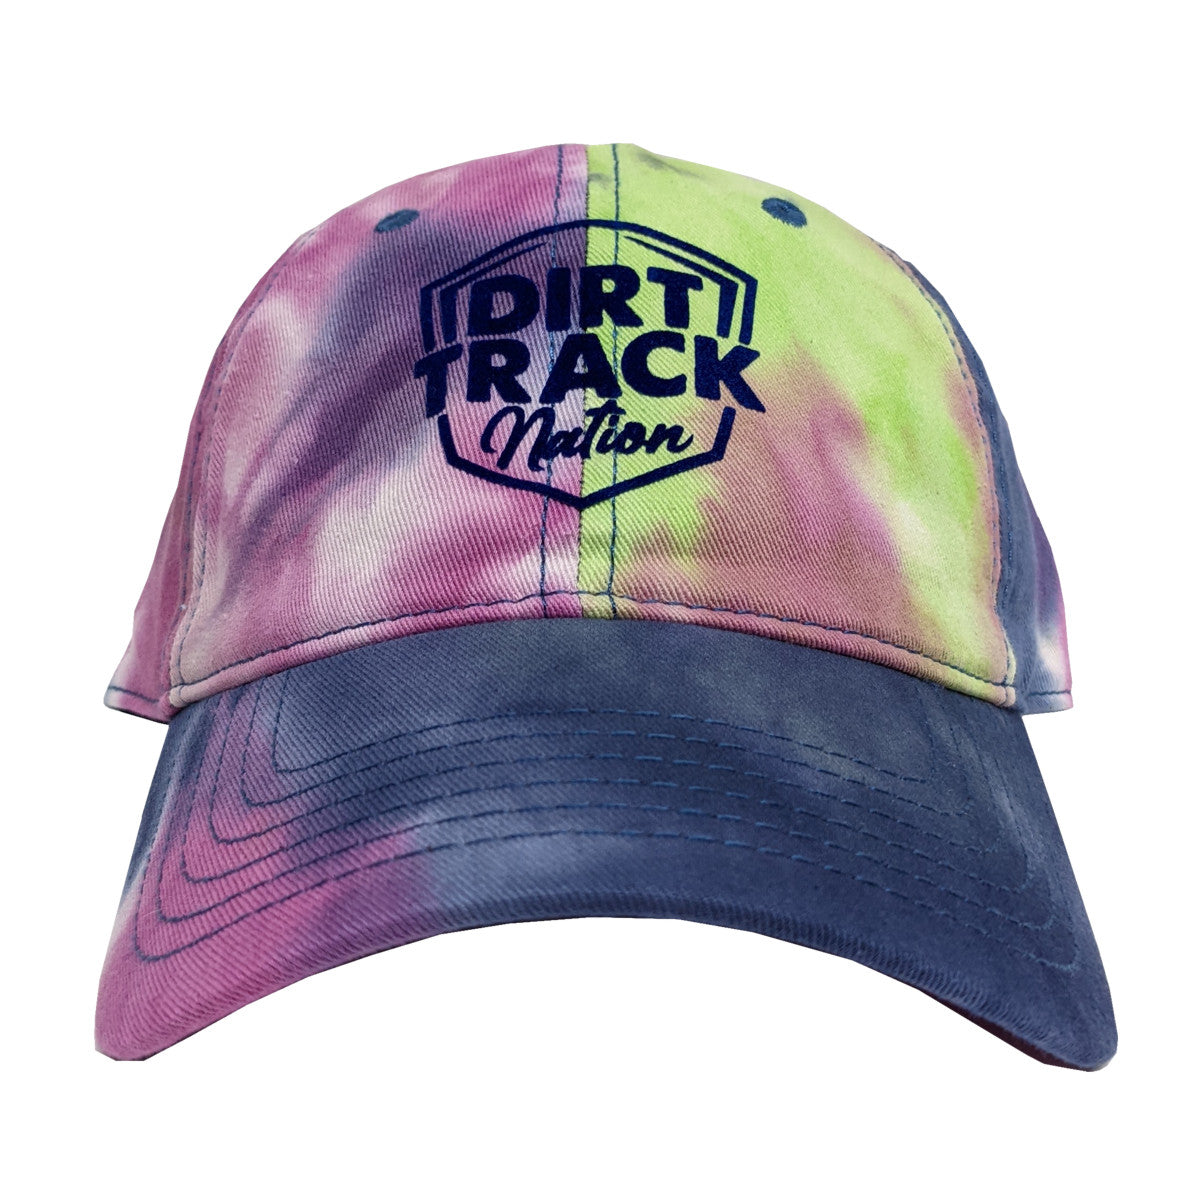 Dirt Track Nation Purple Passion Hat